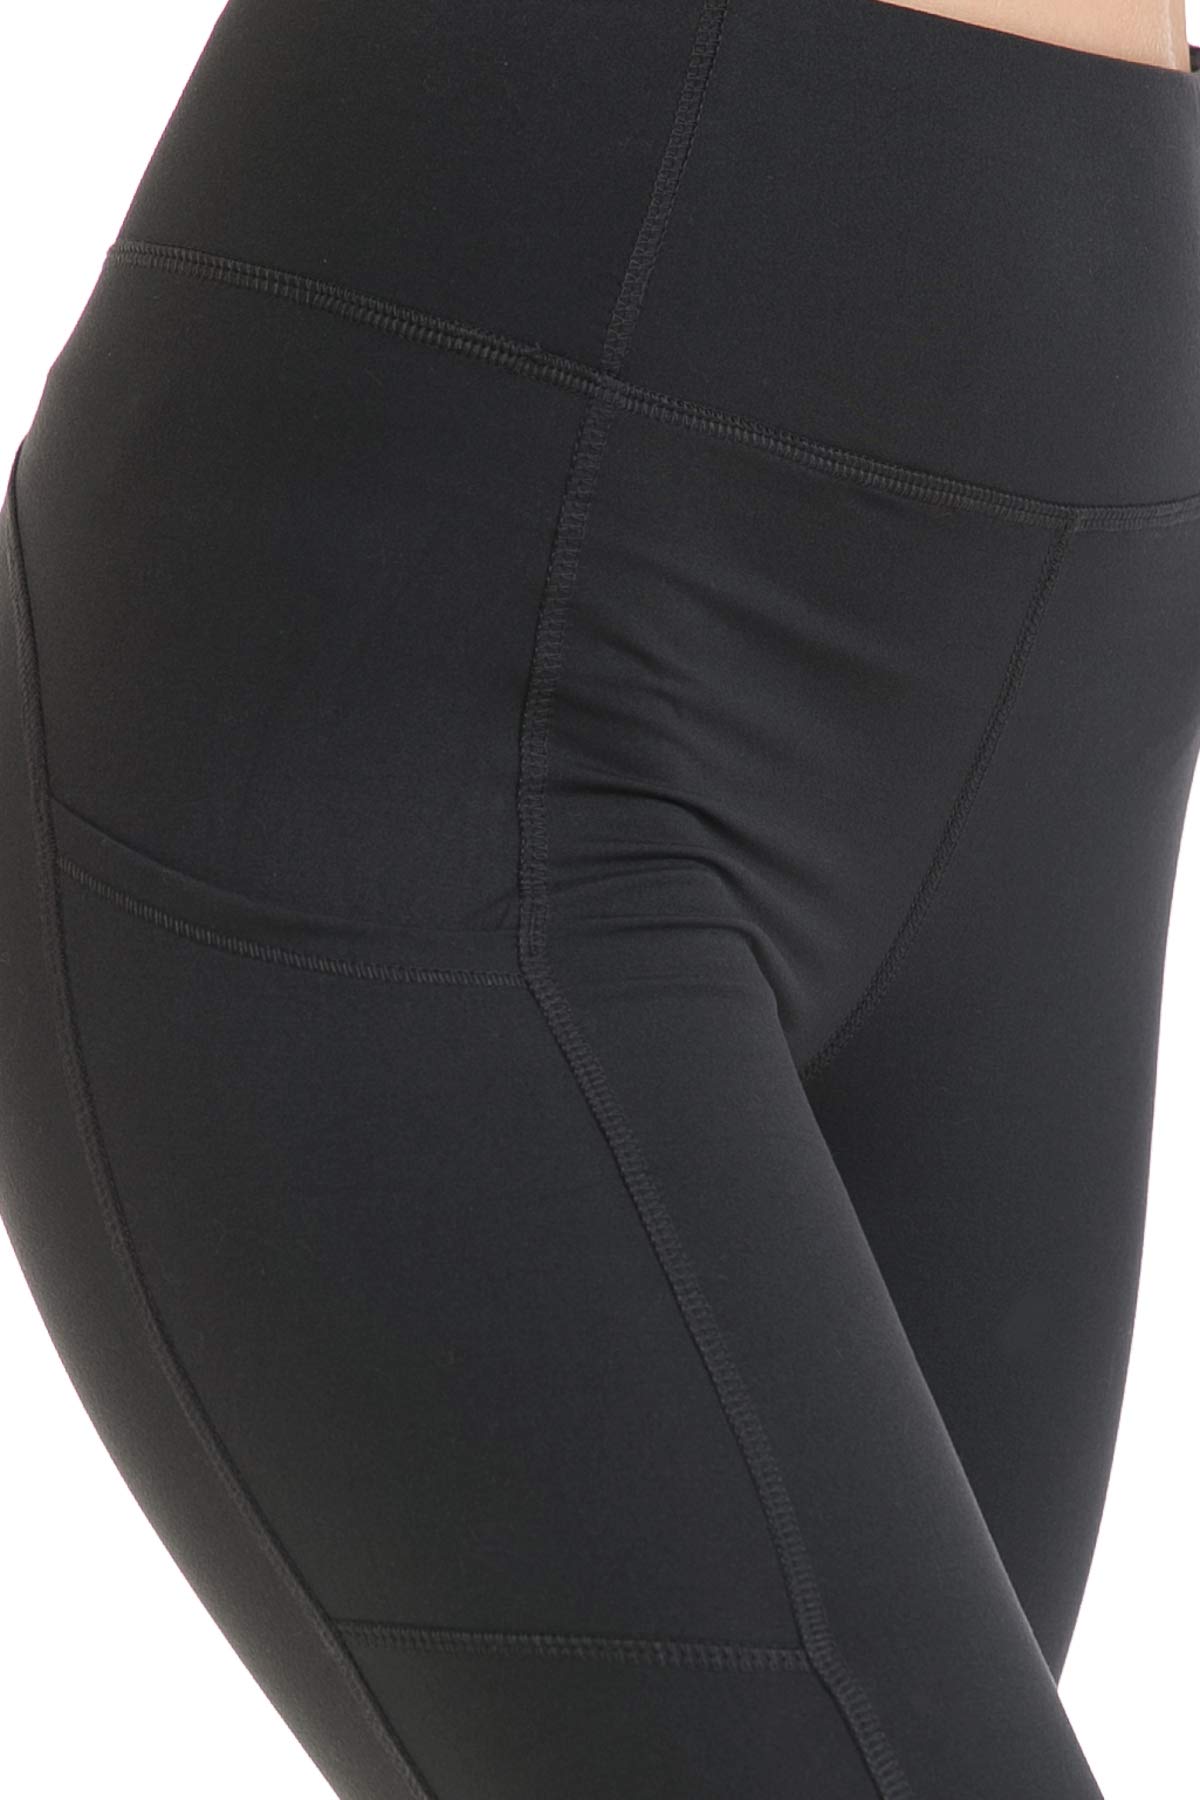 Leggings Depot High Waist Solid Athletic Pants for Women Pocket Yoga Pants - Reg(S,M,L,XL), Plus Size(1X,2X,3X)